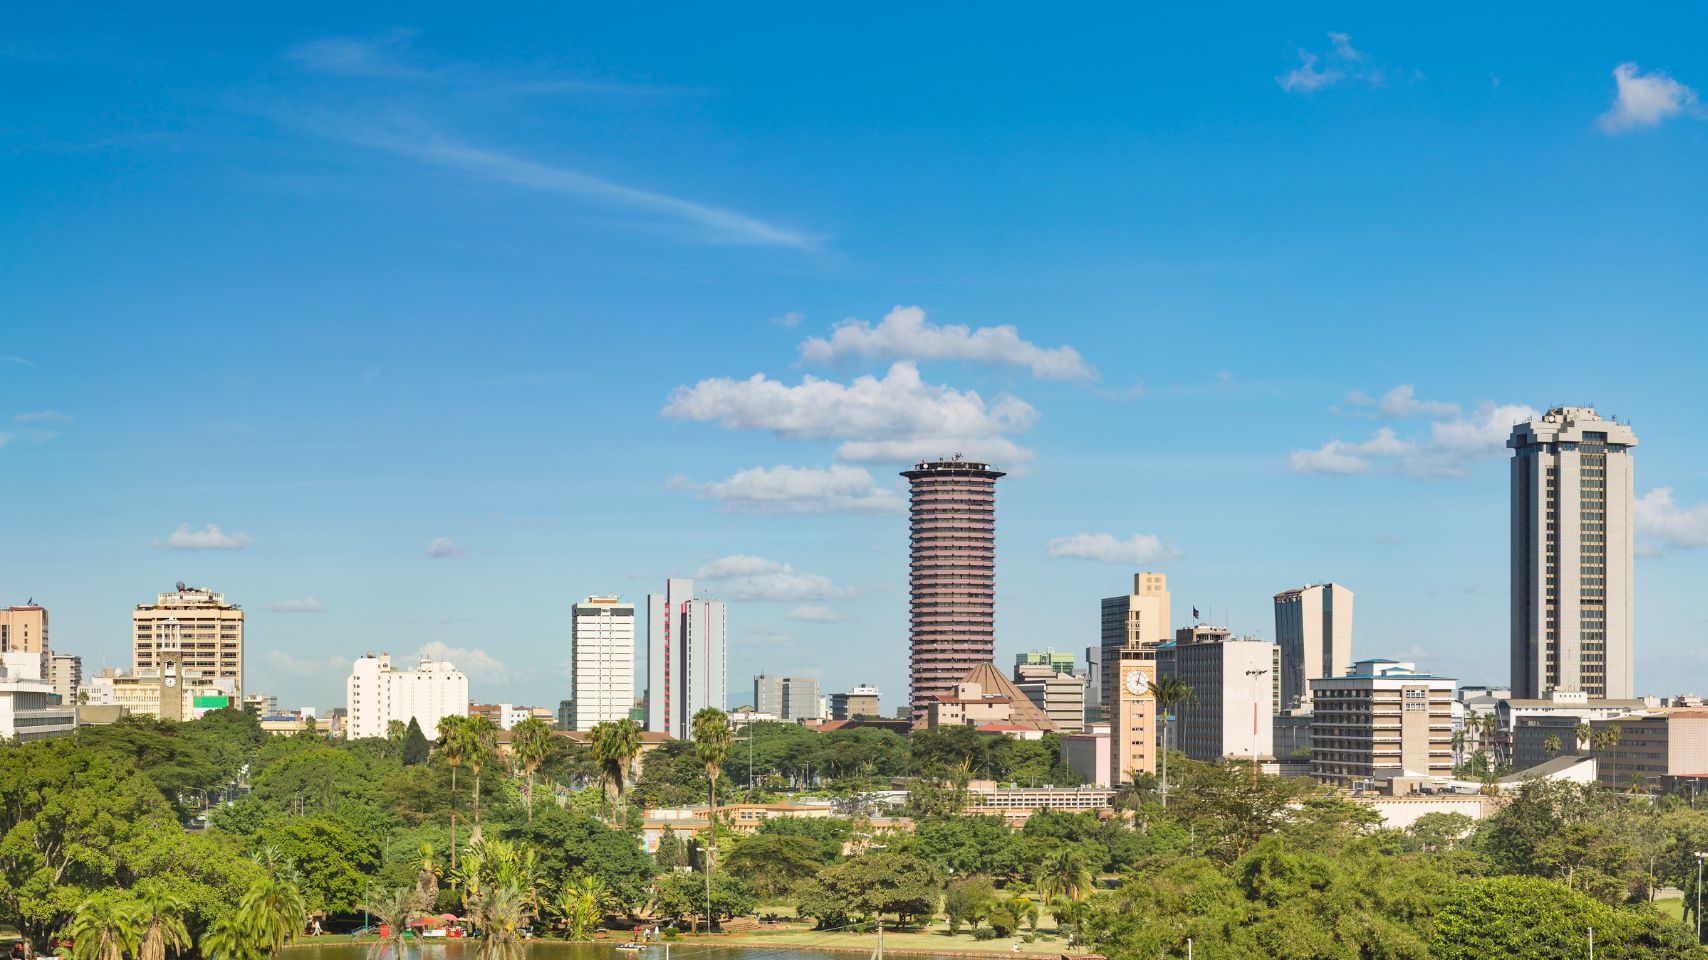 Above: Where Nairobi gets its nickname